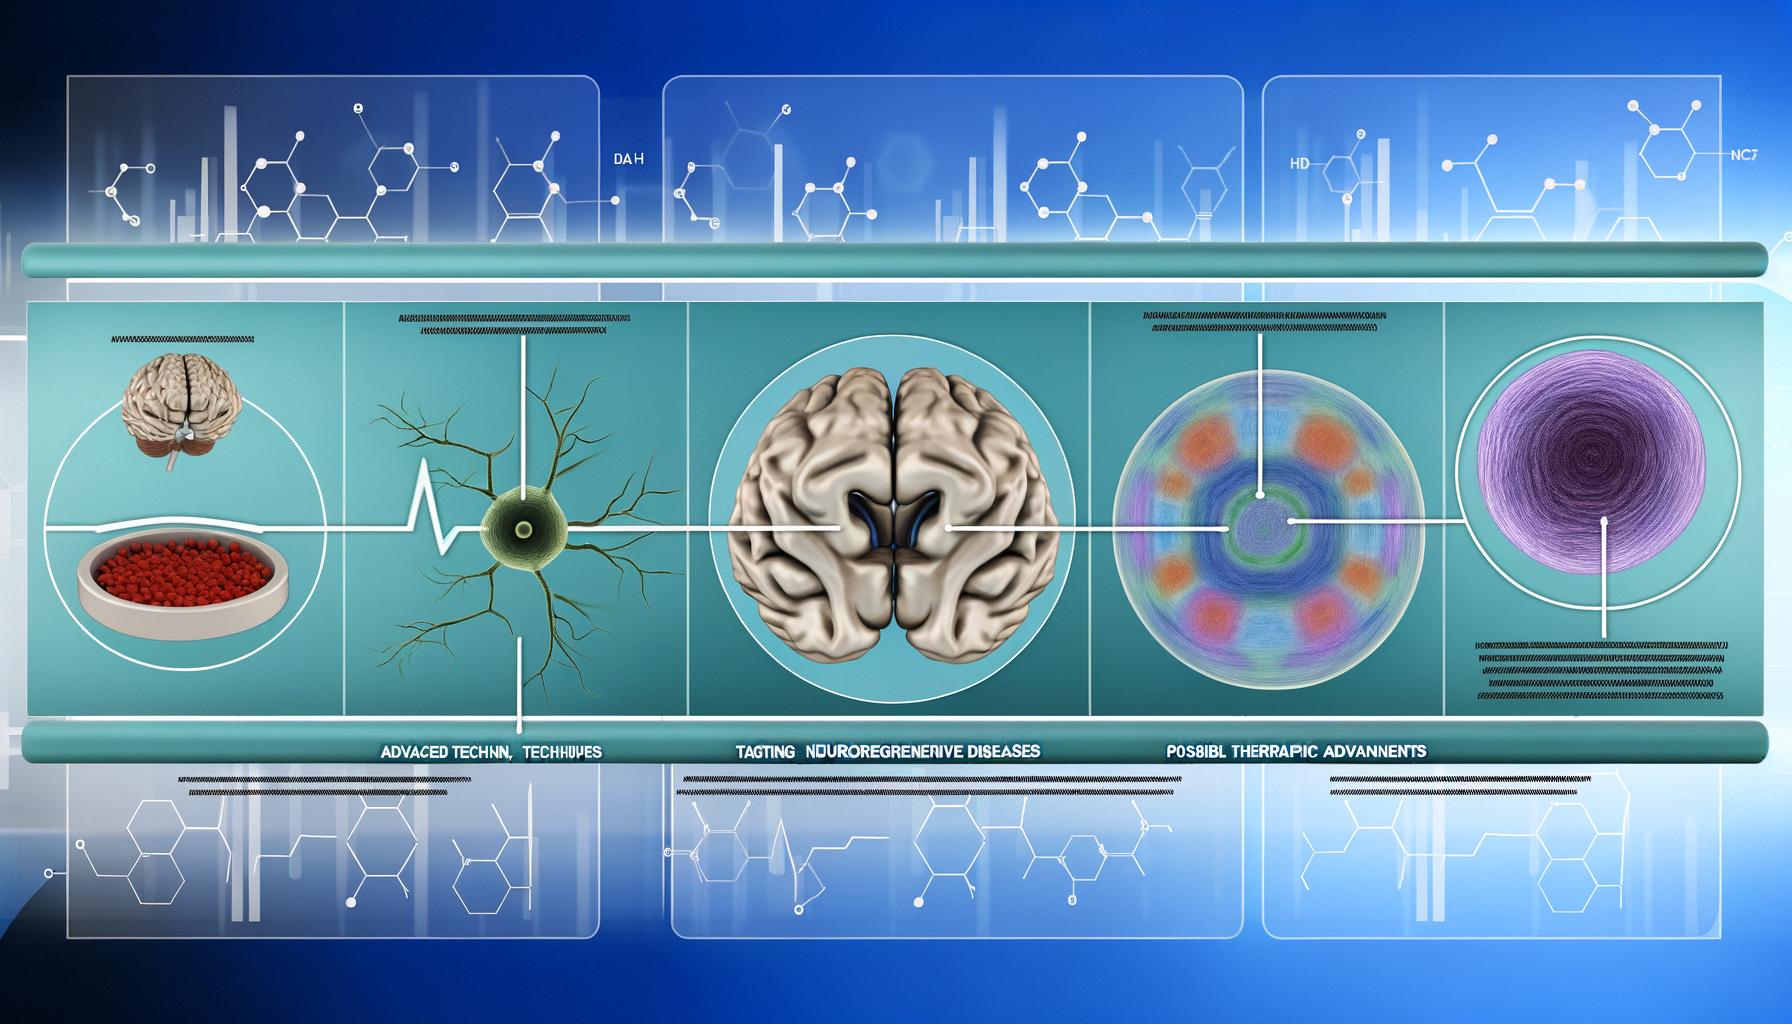 Recent advances target neurodegenerative diseases